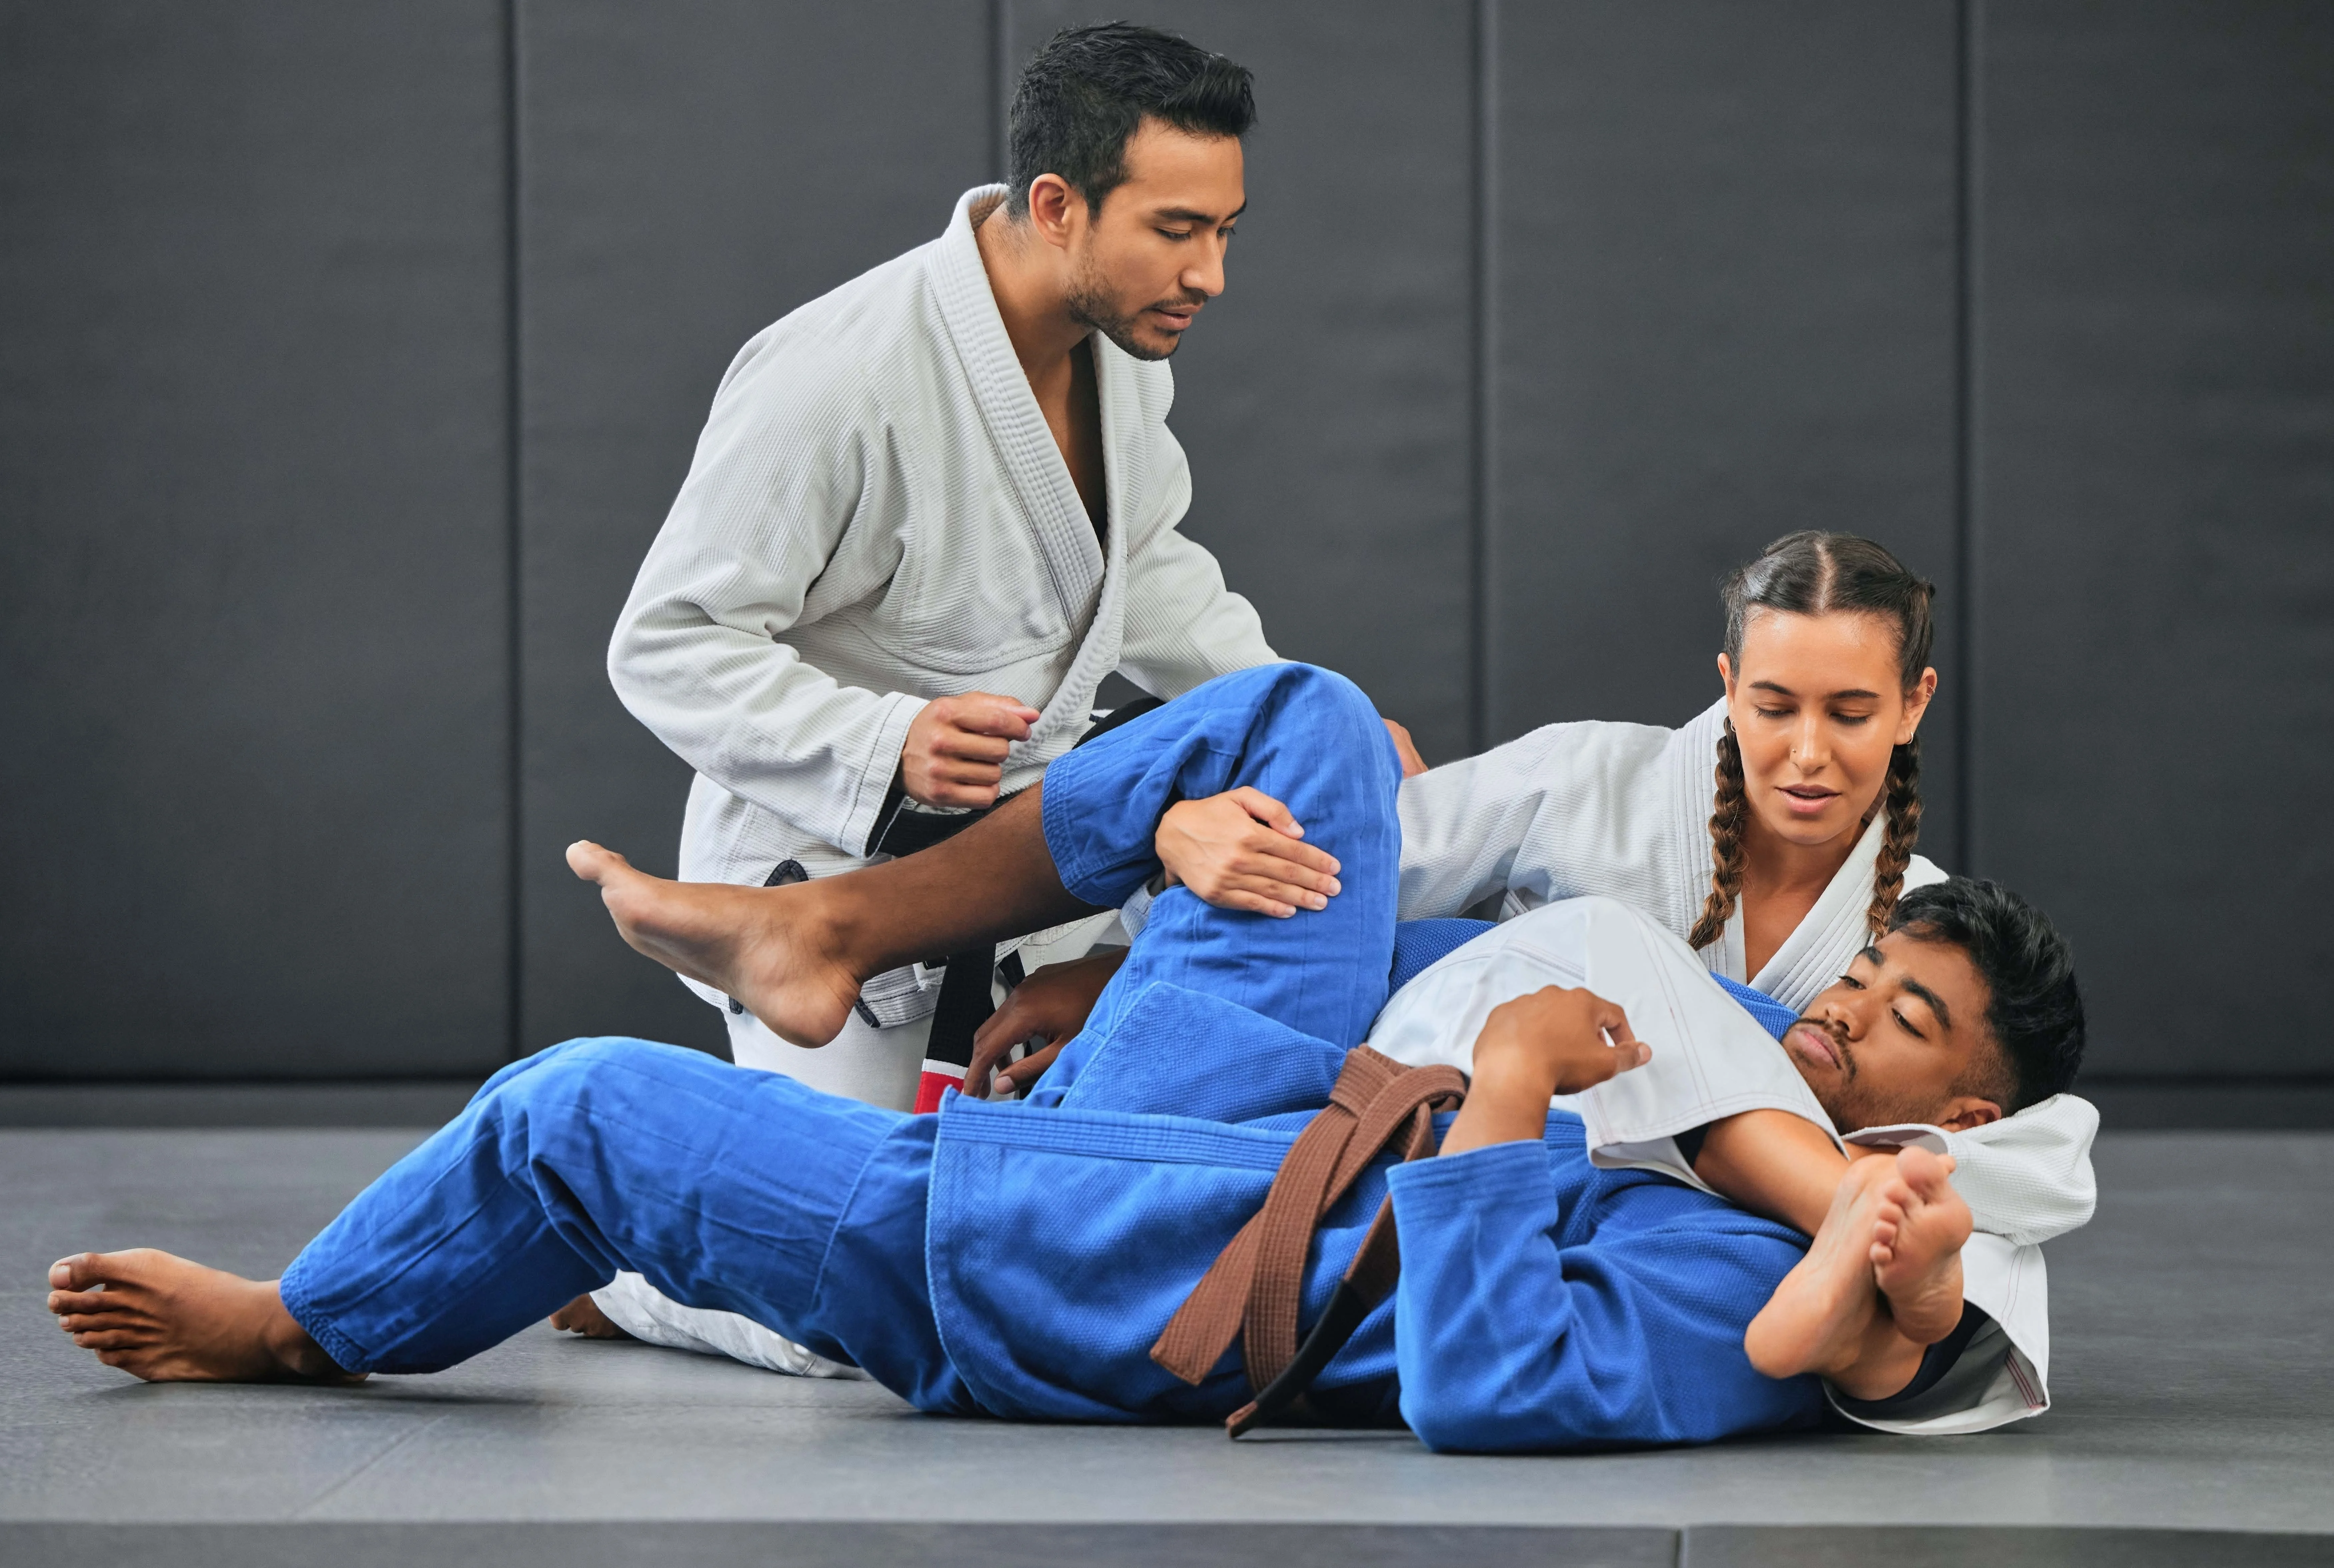 The Rise and Rise of Brazilian Jiu-jitsu